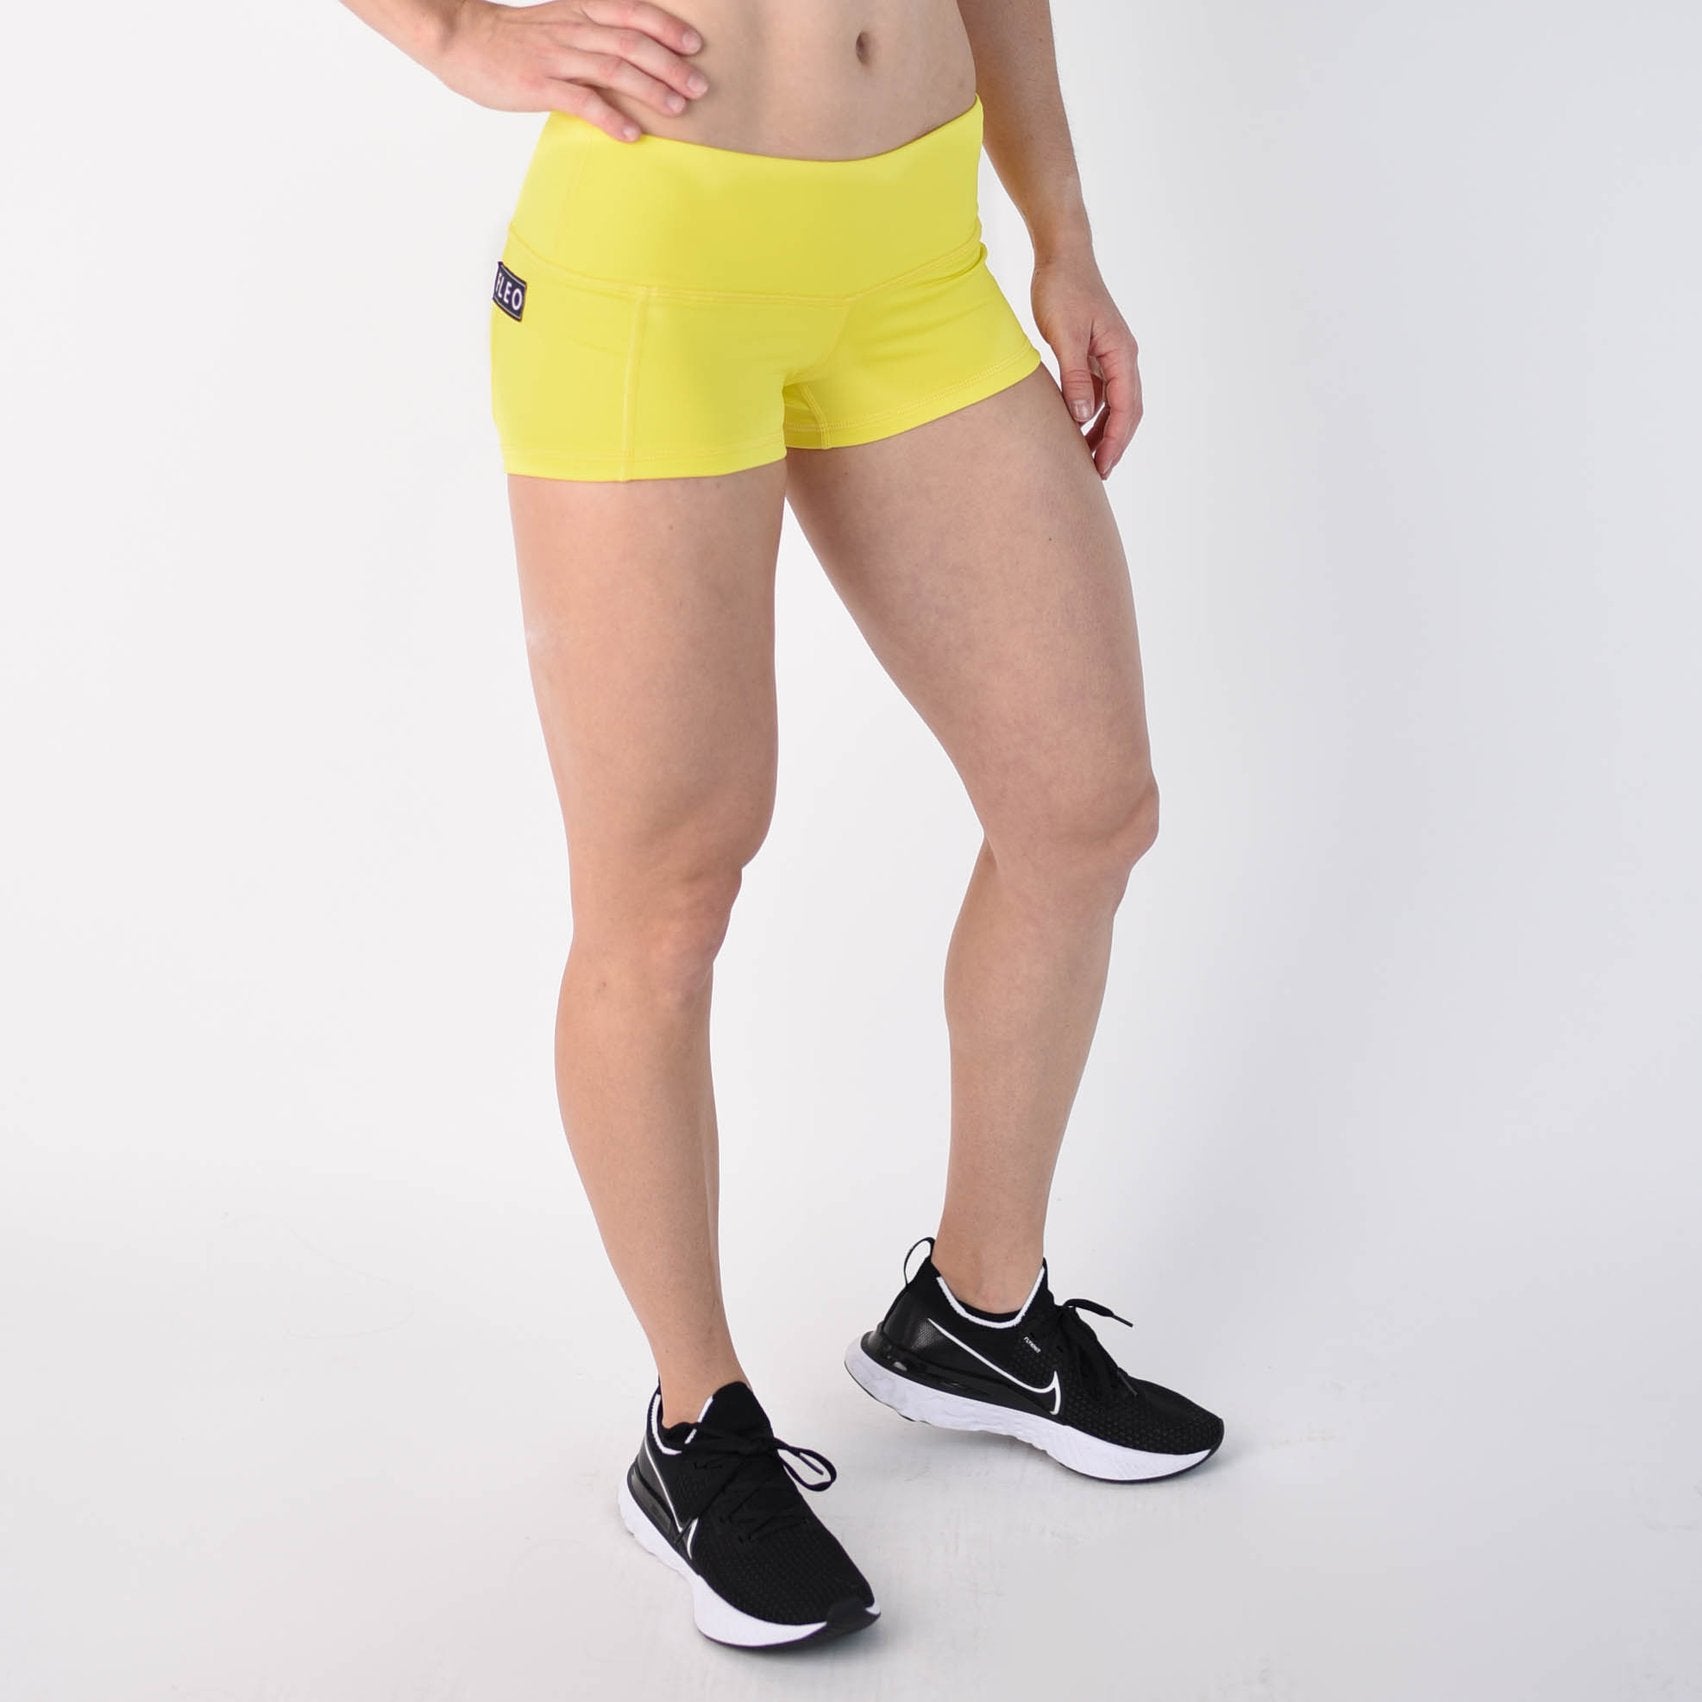 FLEO Neon Yellow Shorts (Original) - 9 for 9